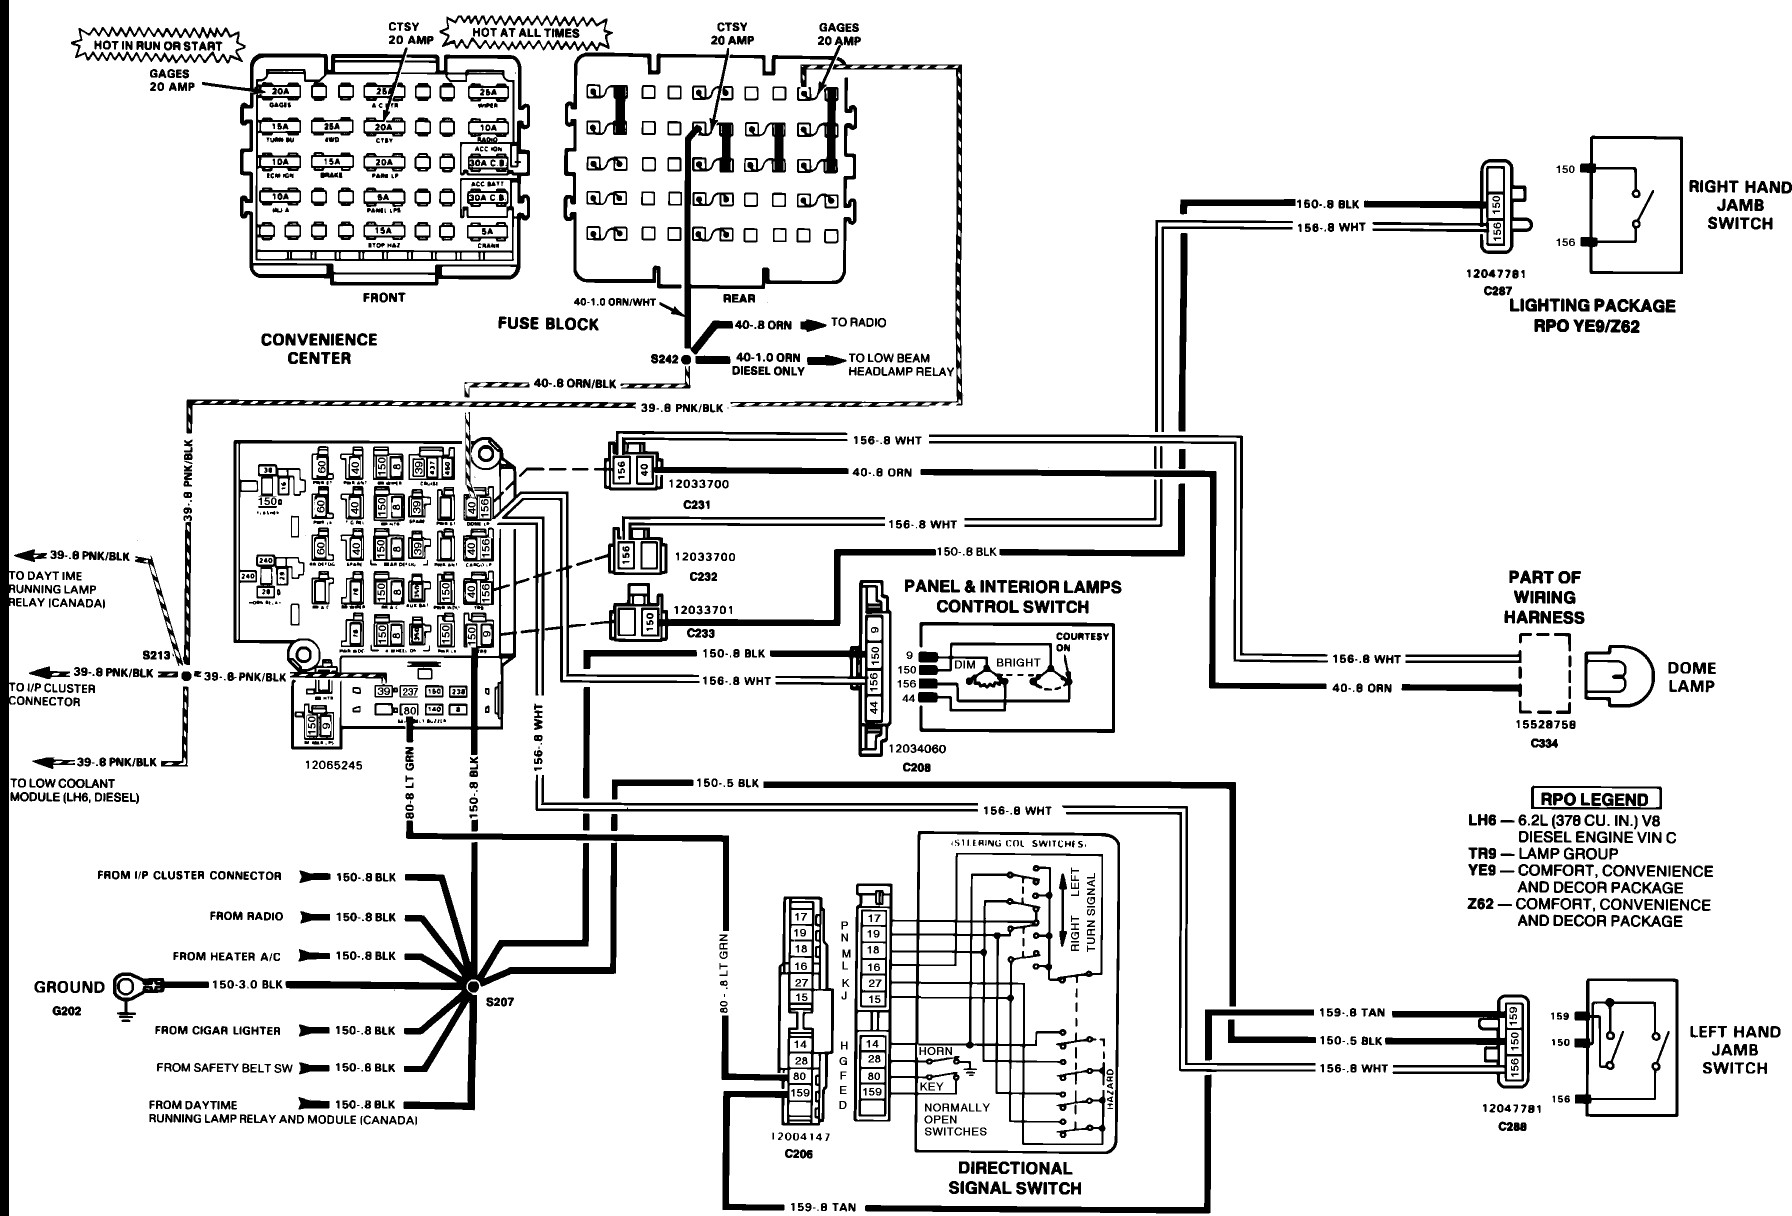 2000 Chevy S10 Wiring Diagram 1988 Chevy C2500 Wiring Diagram Wiring Diagram Of 2000 Chevy S10 Wiring Diagram